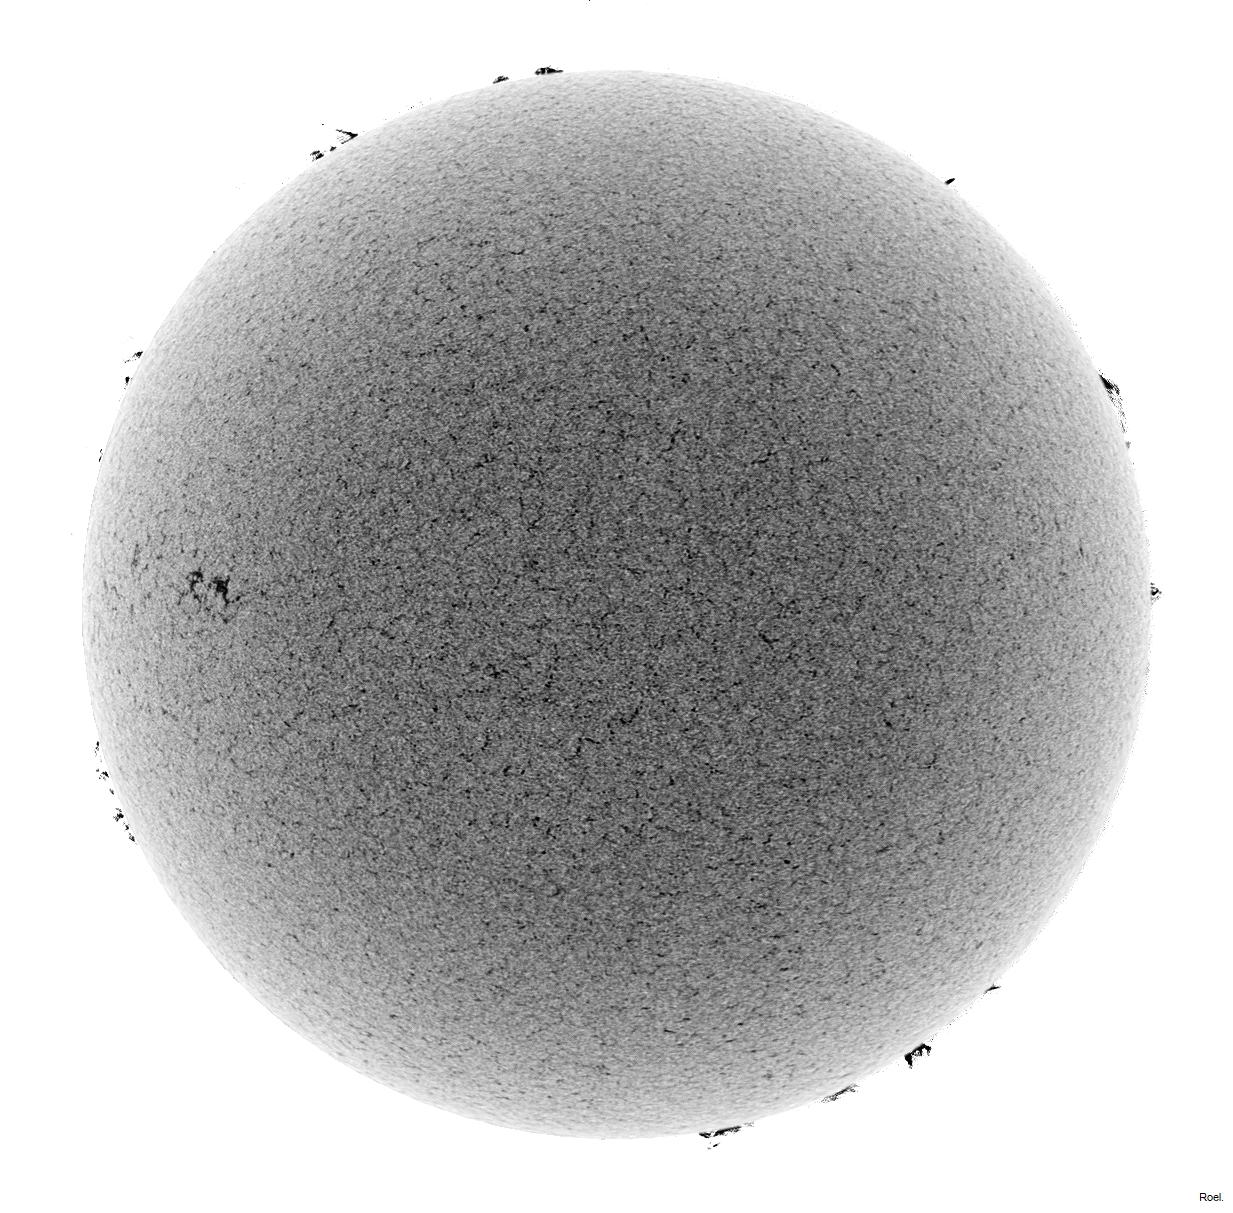 Sol del 5 de mayo del 2021-Meade-CaK-PSTmod-1neg.jpg